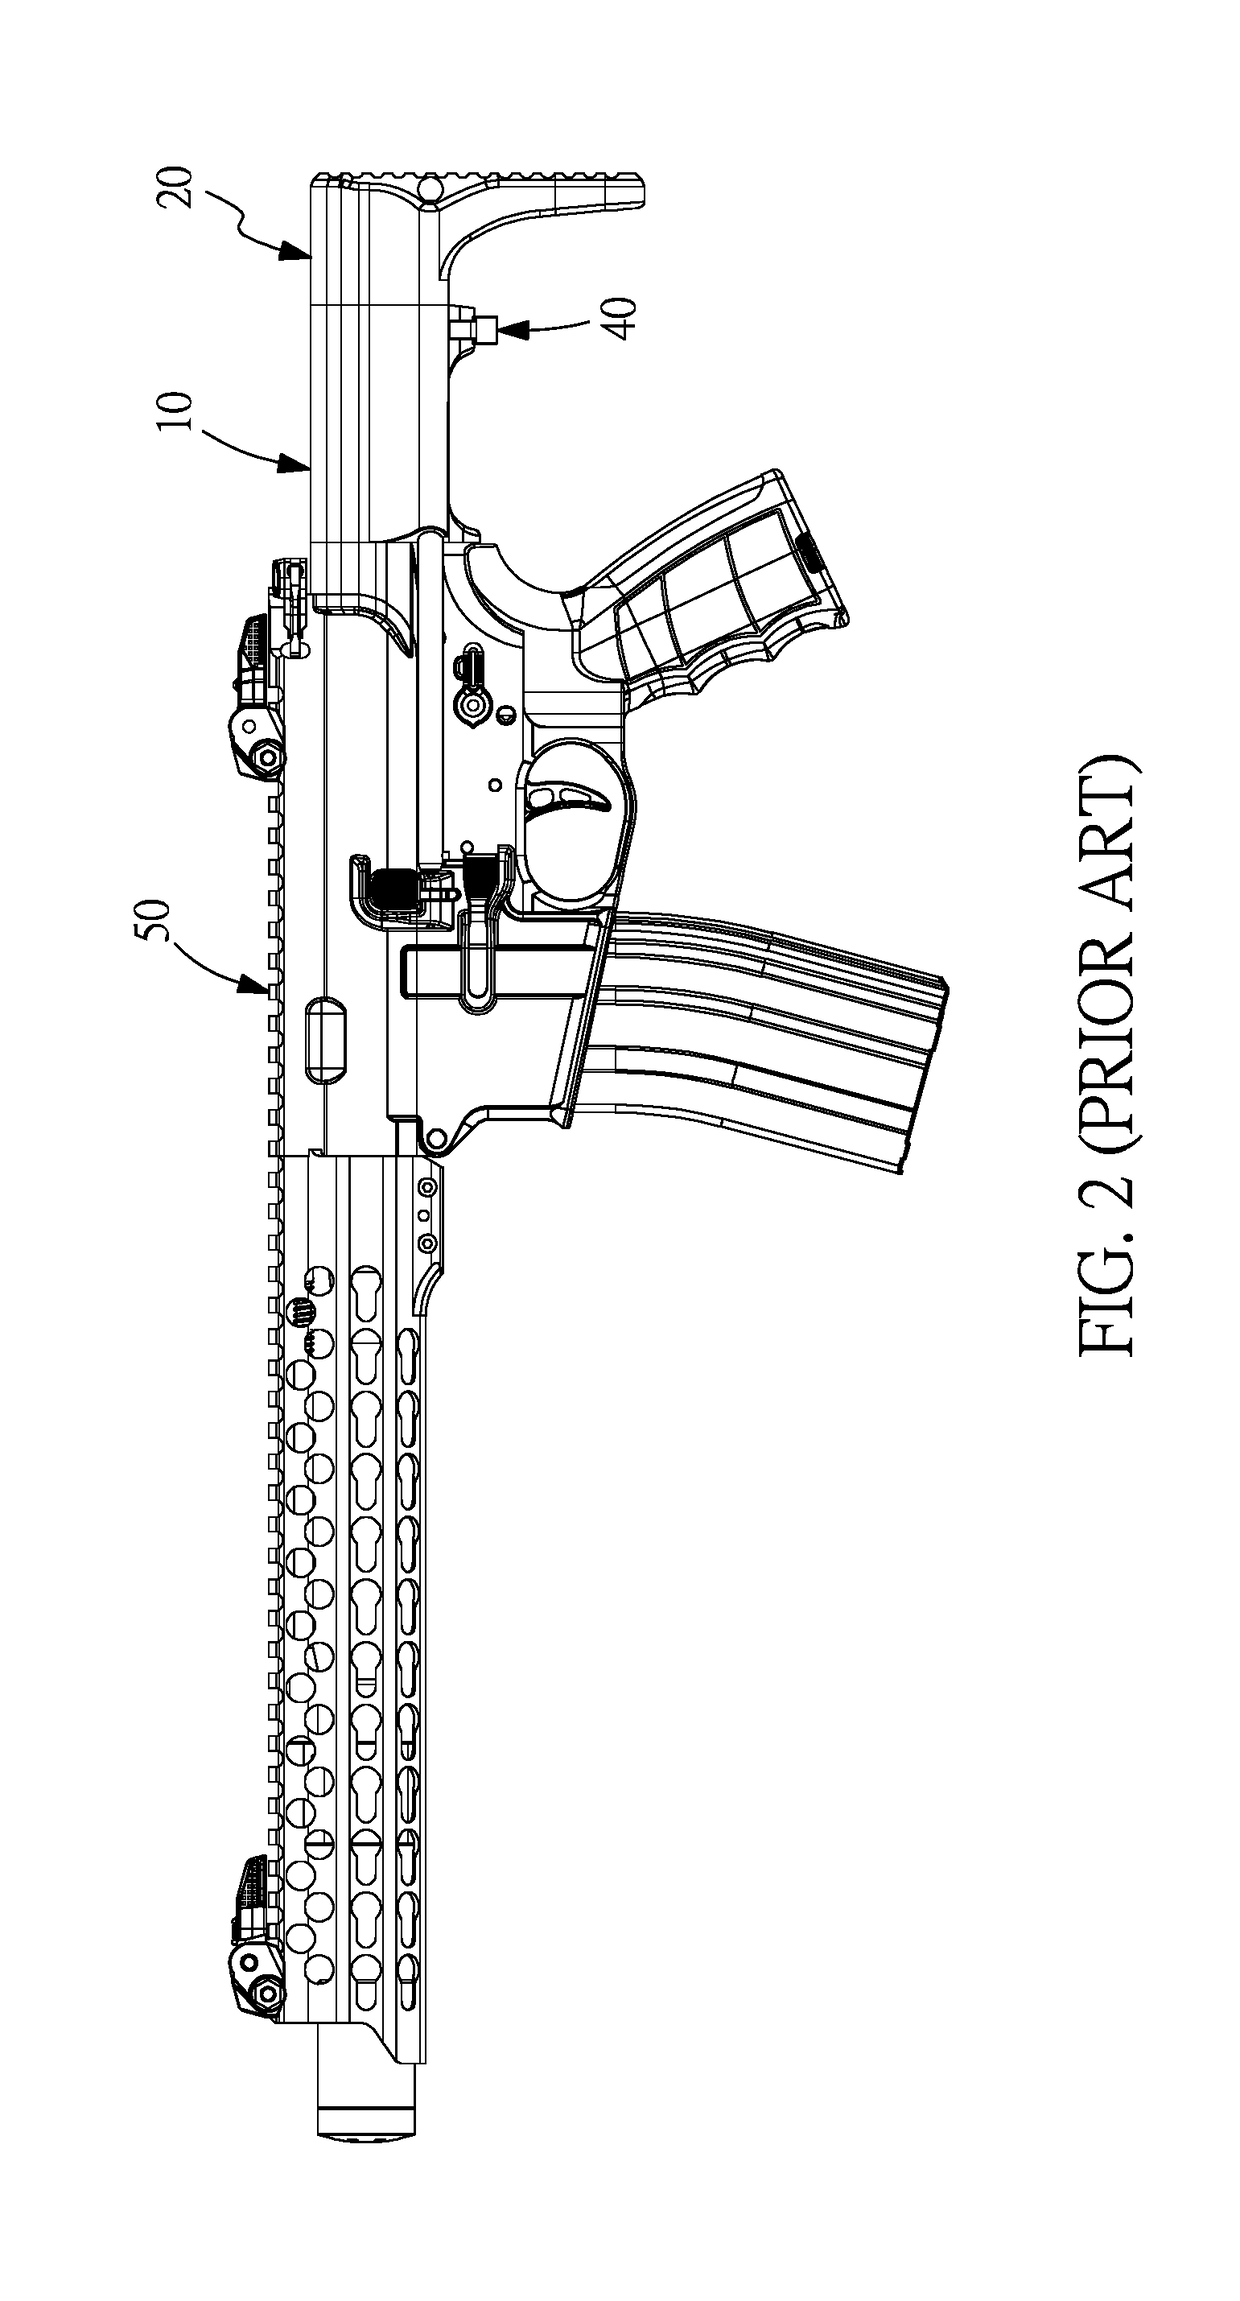 Butt structure for a toy gun